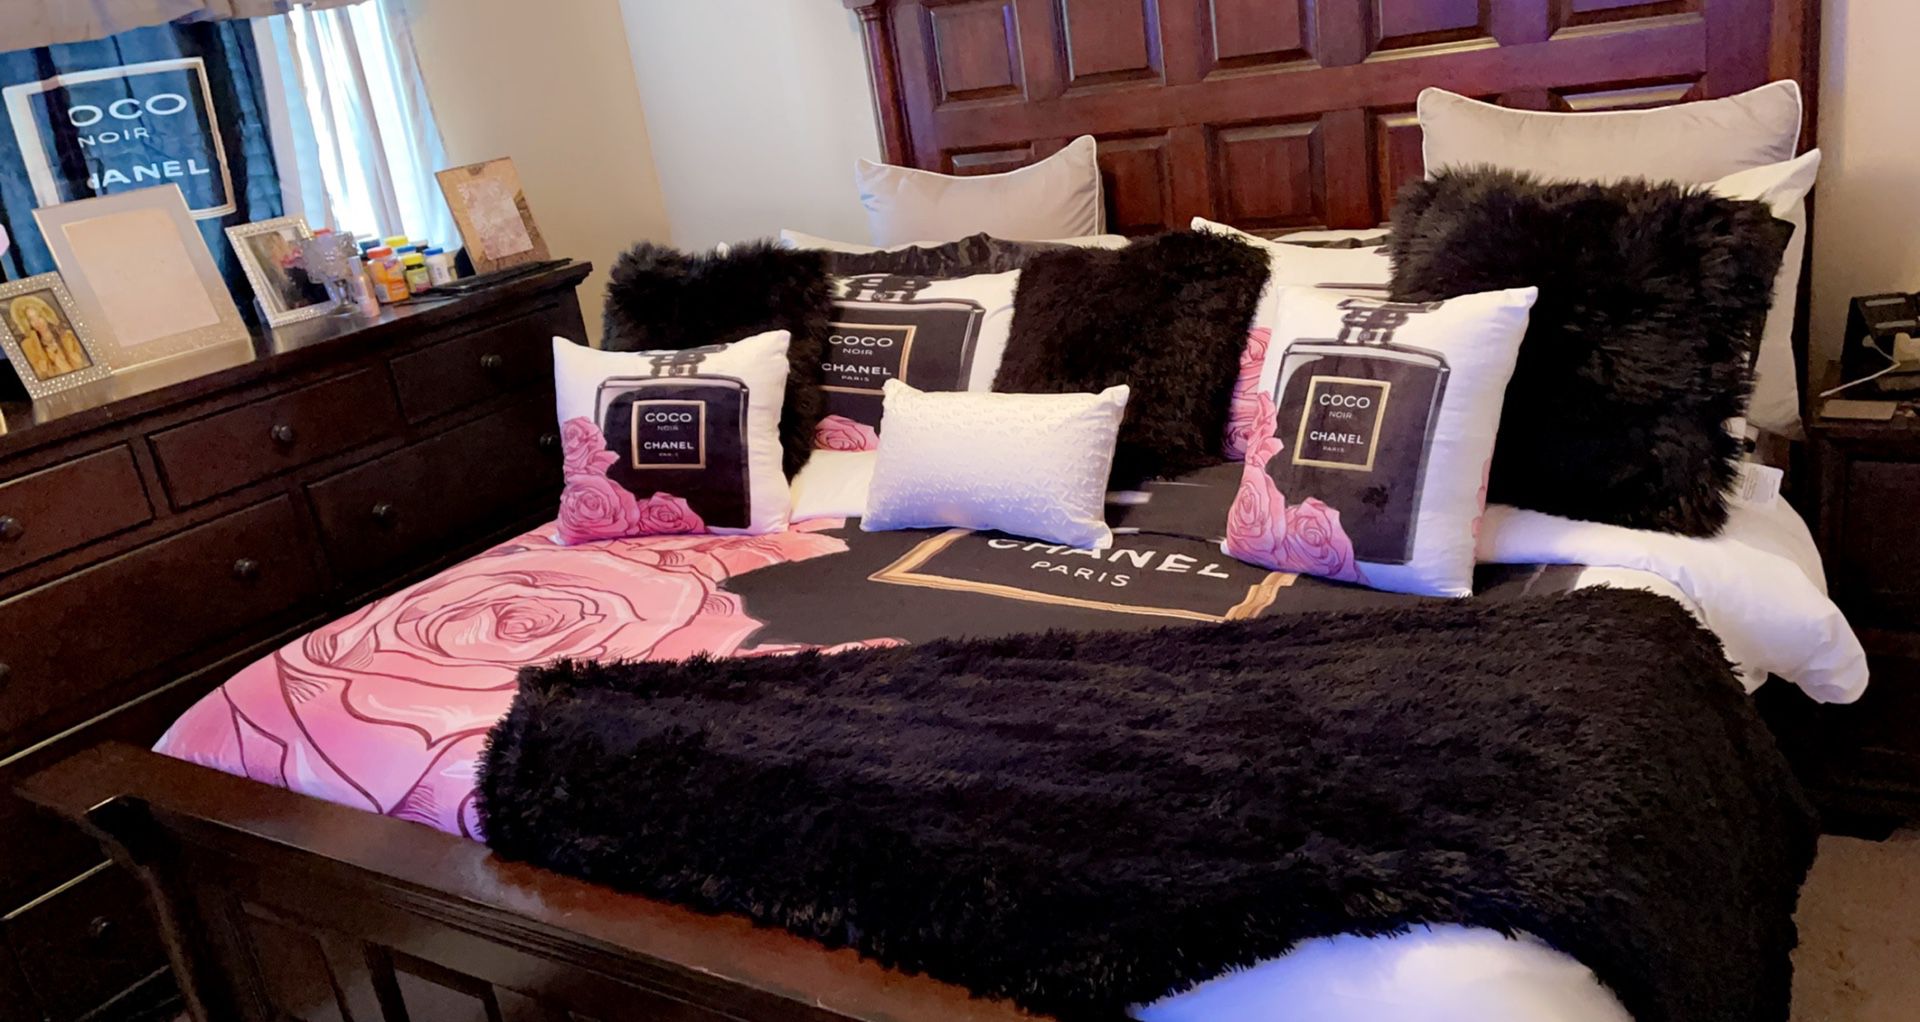 Coco Chanel Hot Pink Bedding Set - Mugteeco